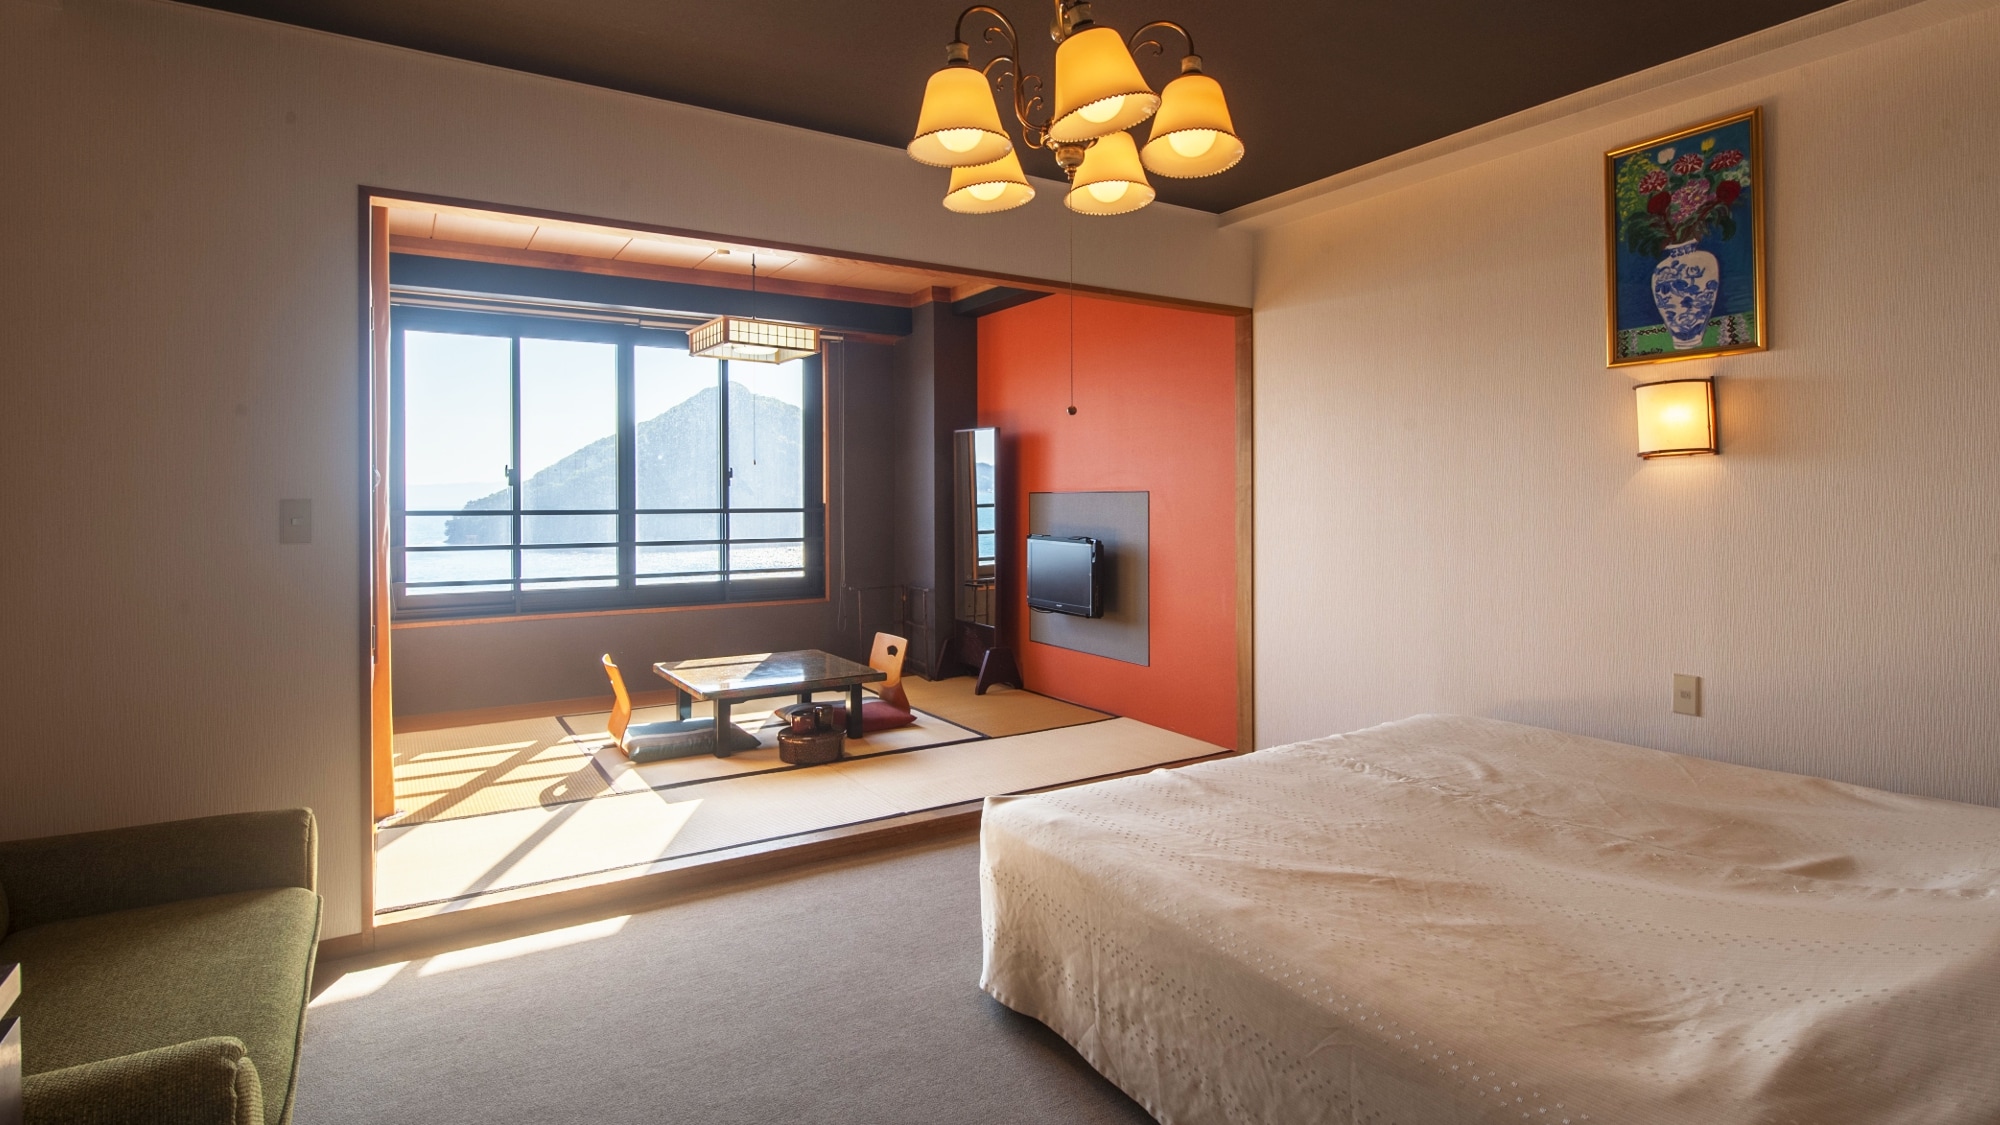 Tempat tidur king kamar Jepang dan Barat